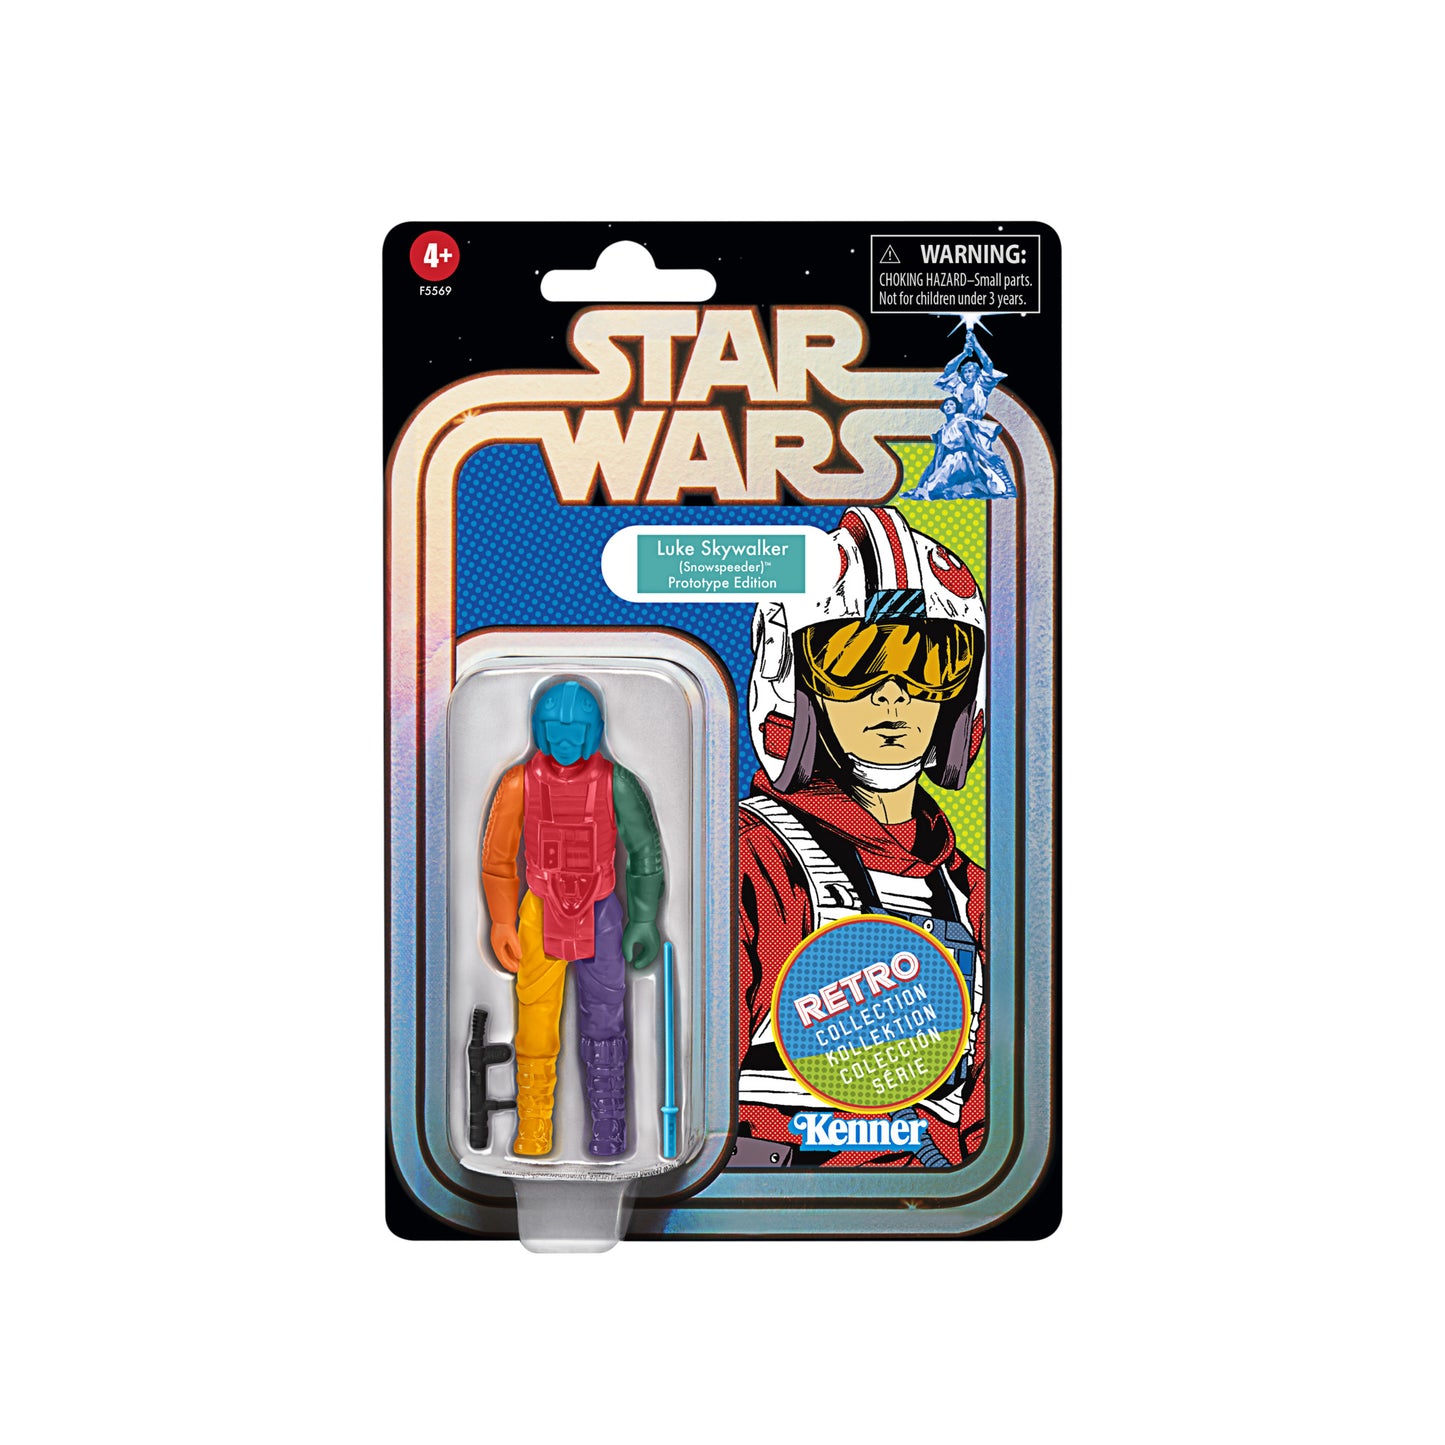 Luke Skywalker Retro Prototype Action figure - Heretoserveyou